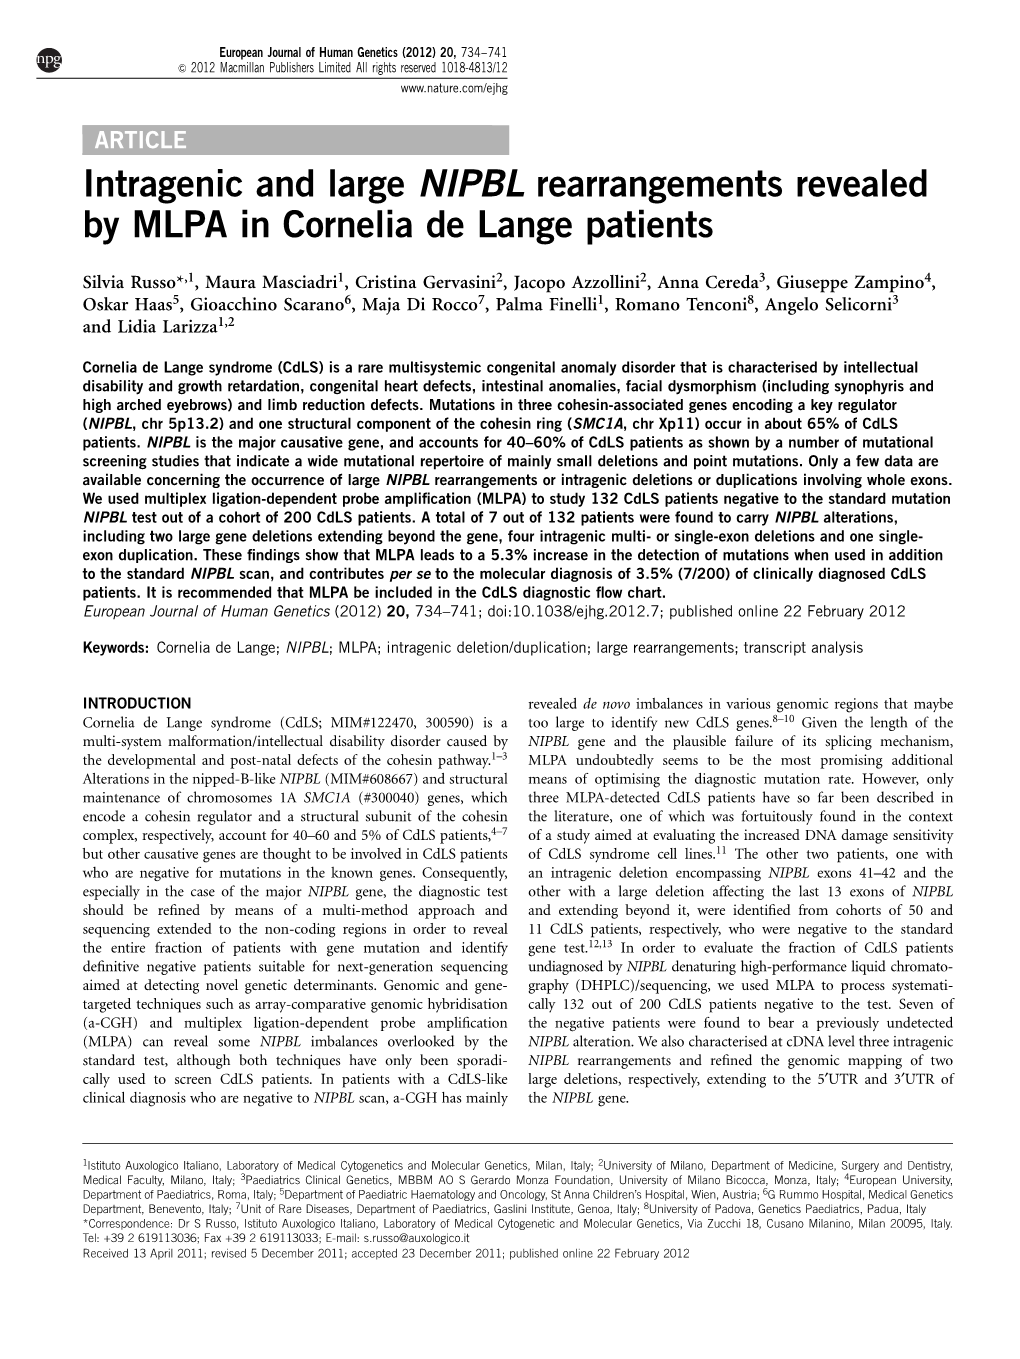 Intragenic and Large NIPBL Rearrangements Revealed by MLPA in Cornelia De Lange Patients